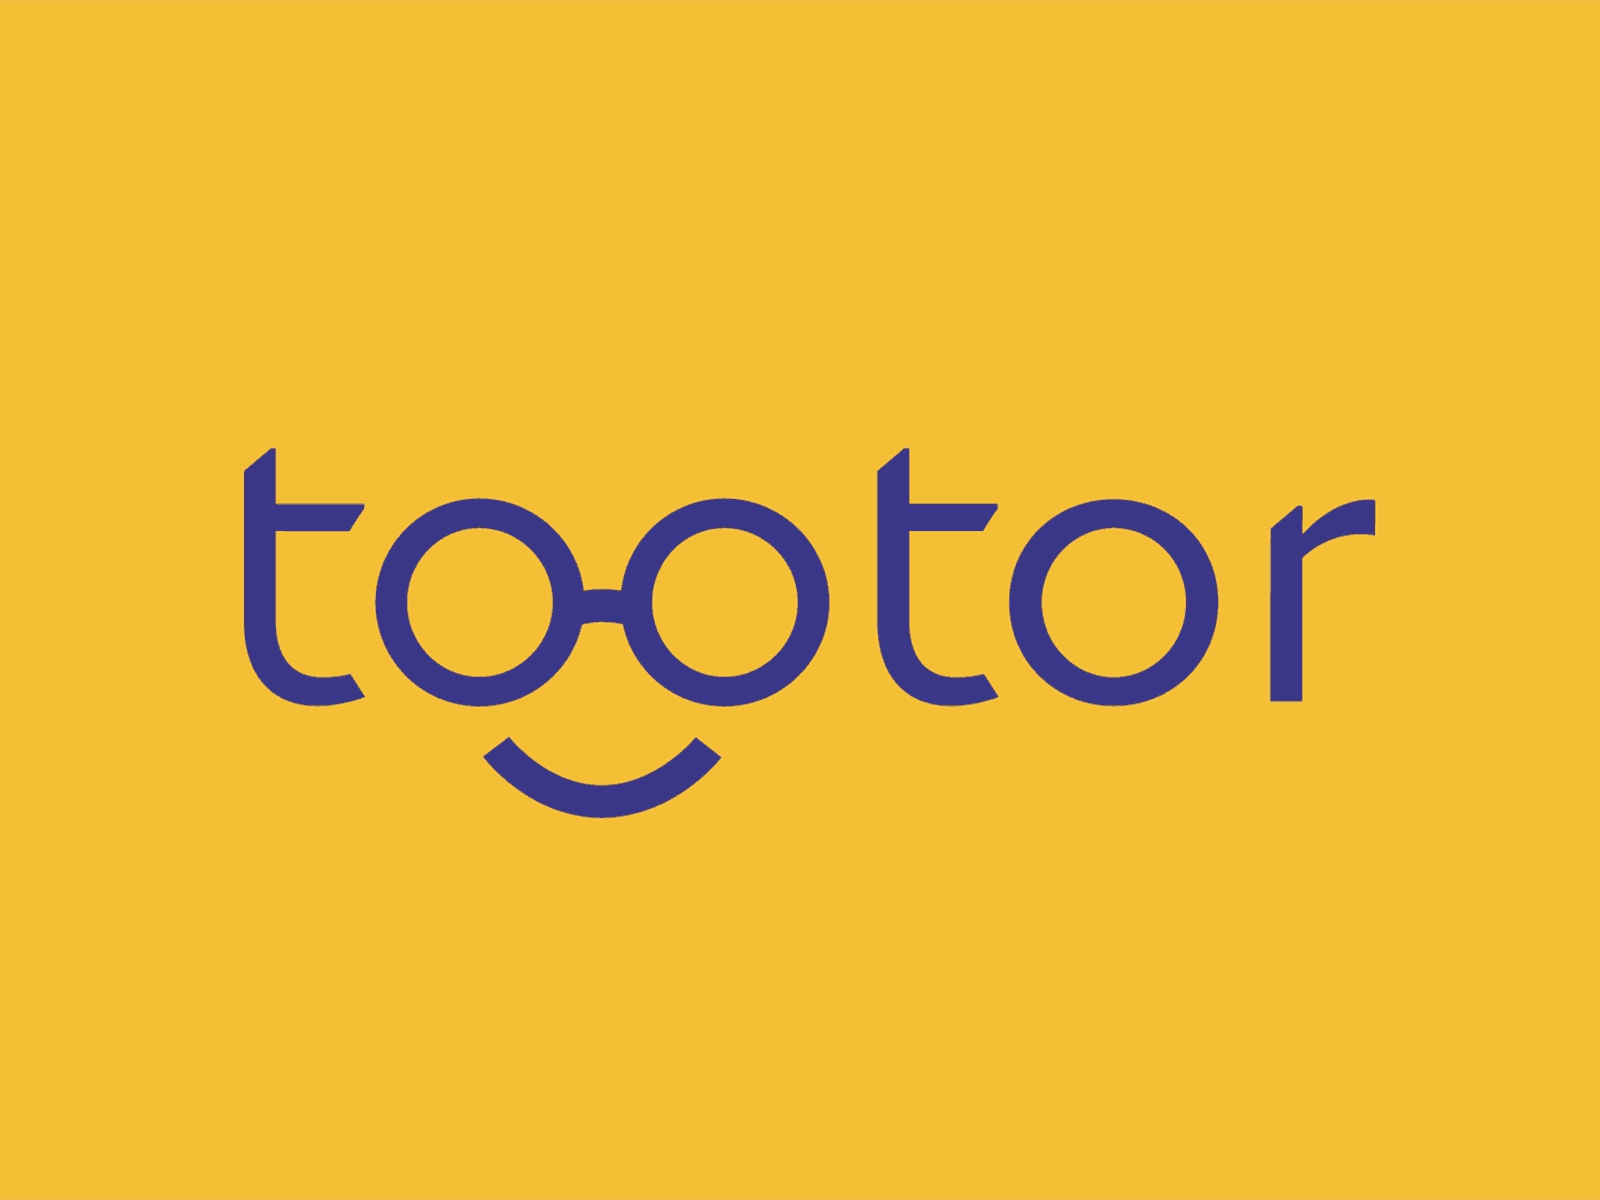 Tootor App Branding